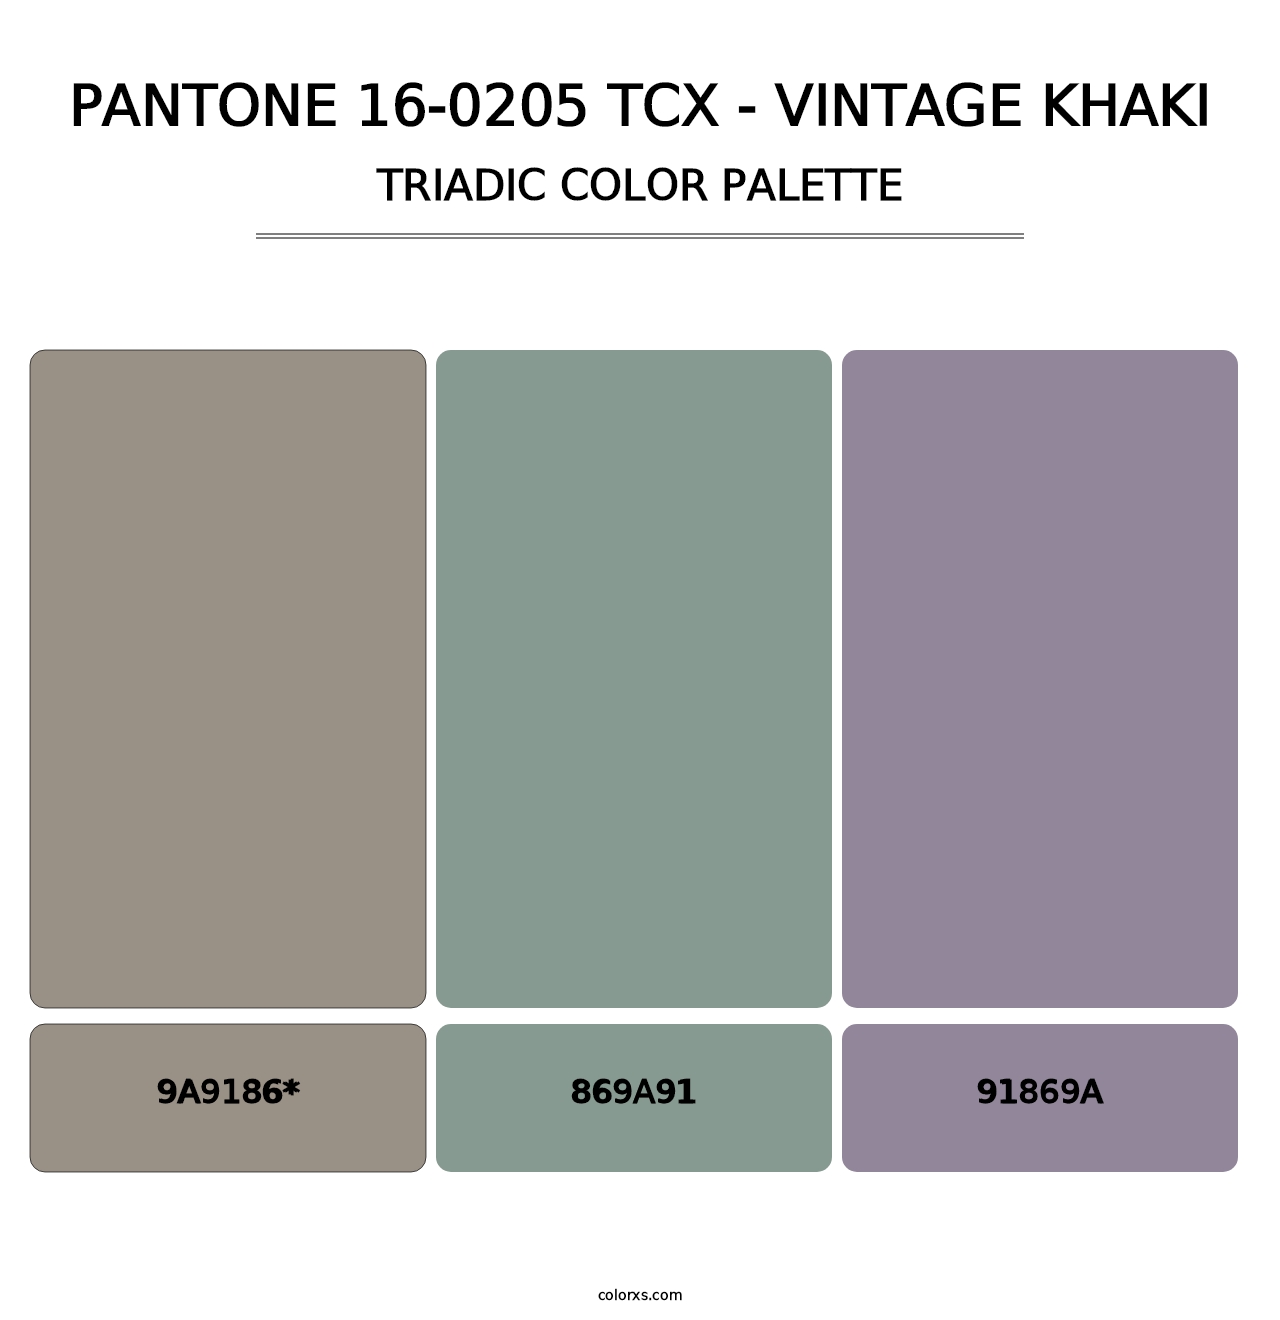 PANTONE 16-0205 TCX - Vintage Khaki - Triadic Color Palette